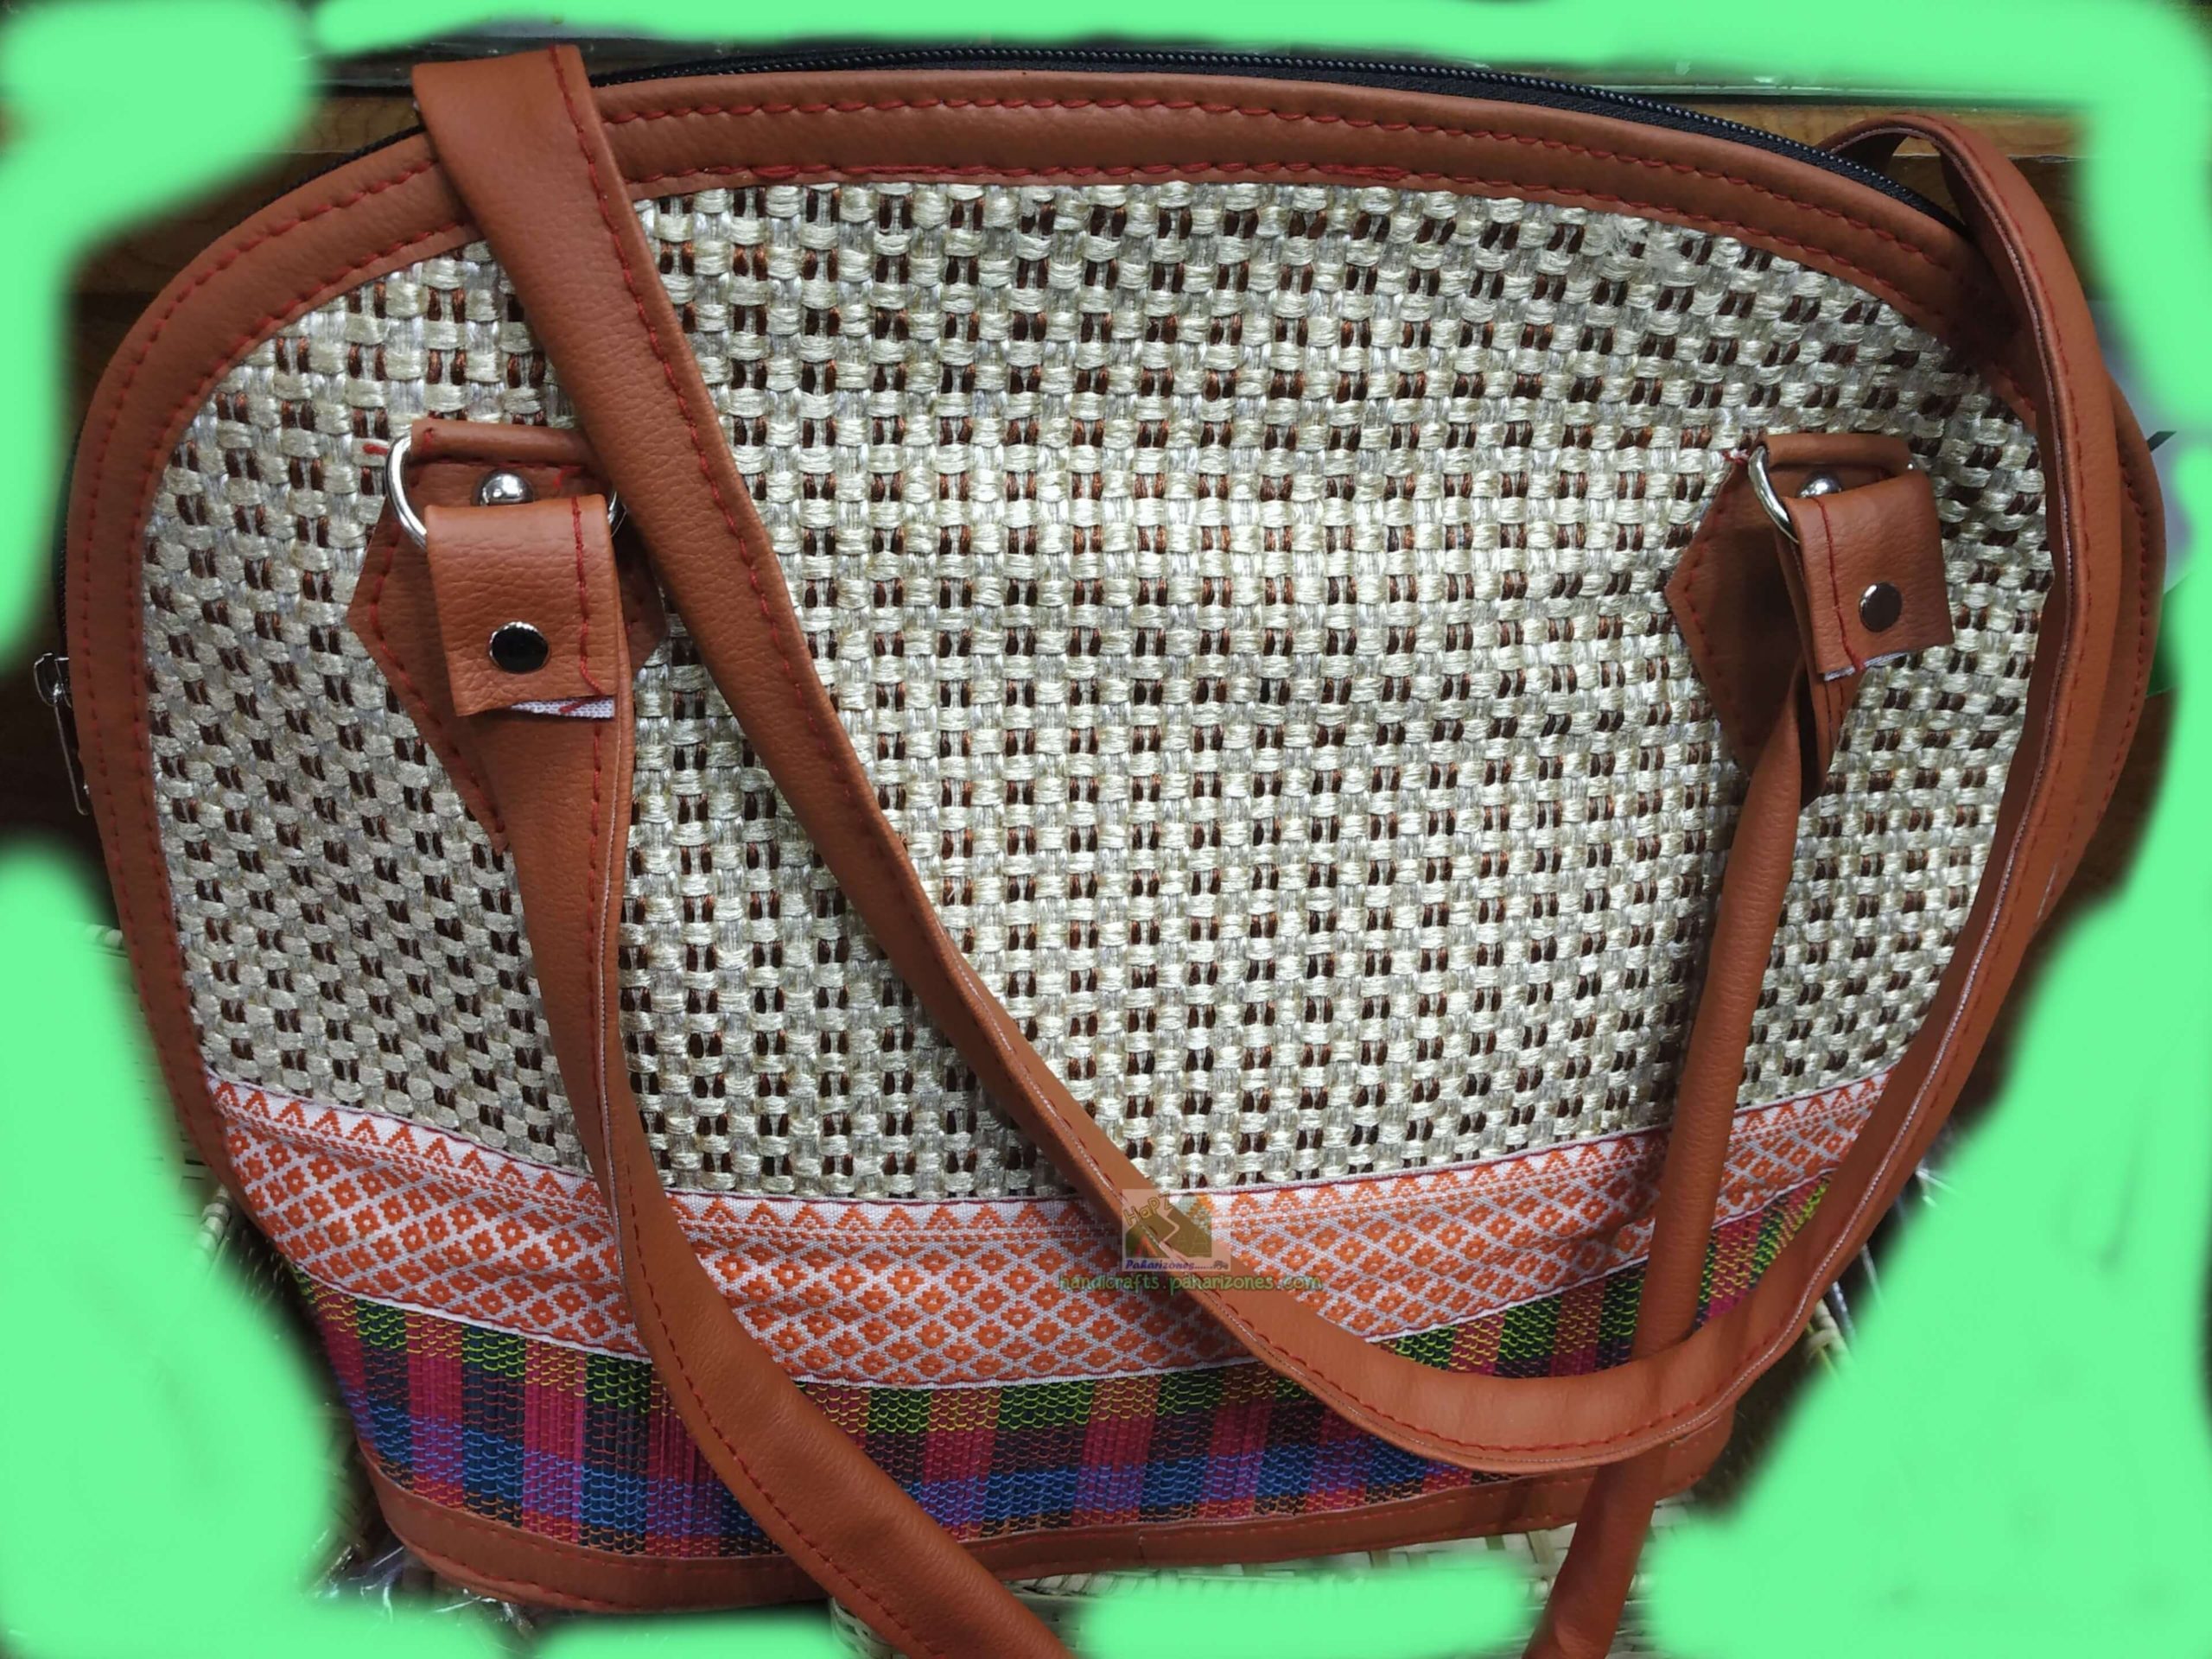 DIY Jute Bag | How to Make Handmade Ladies Purse with Jute Rope | Ladies  Bag with Jute Craft Idea - YouTube